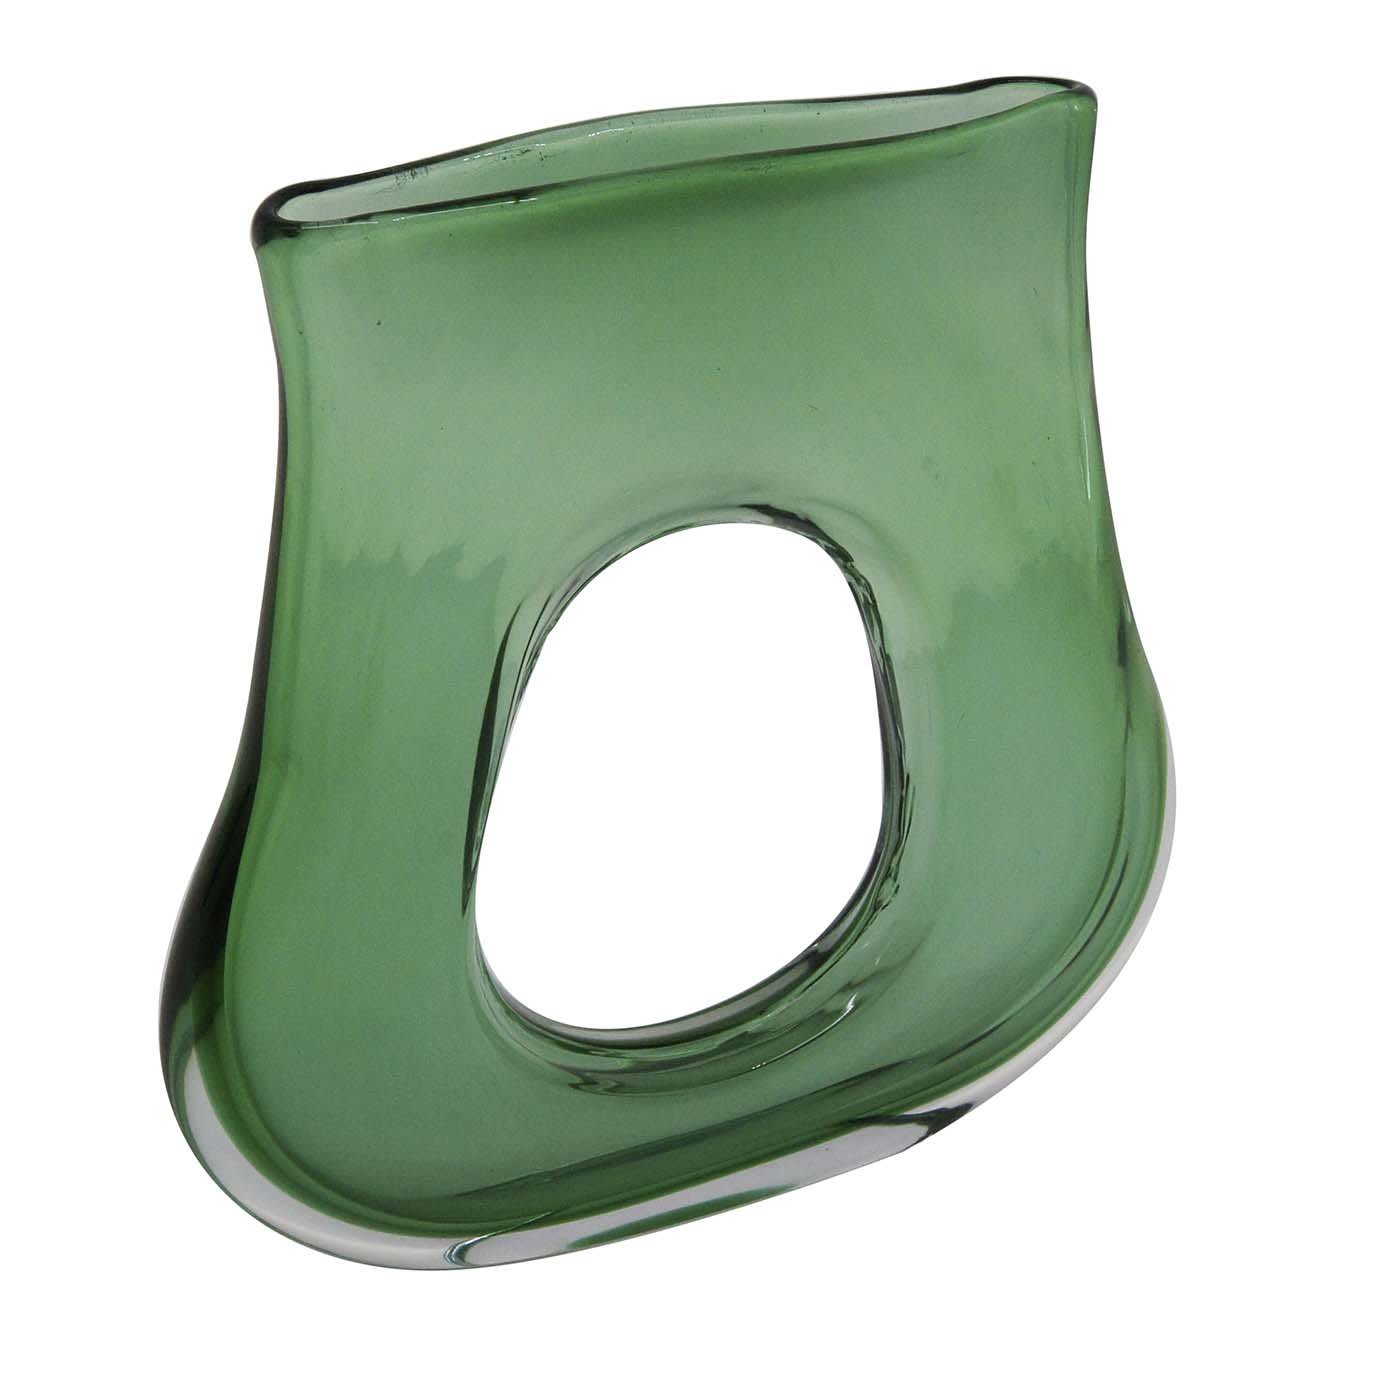 Bucati Green - Wave Murano Glass by Roberto Beltrami